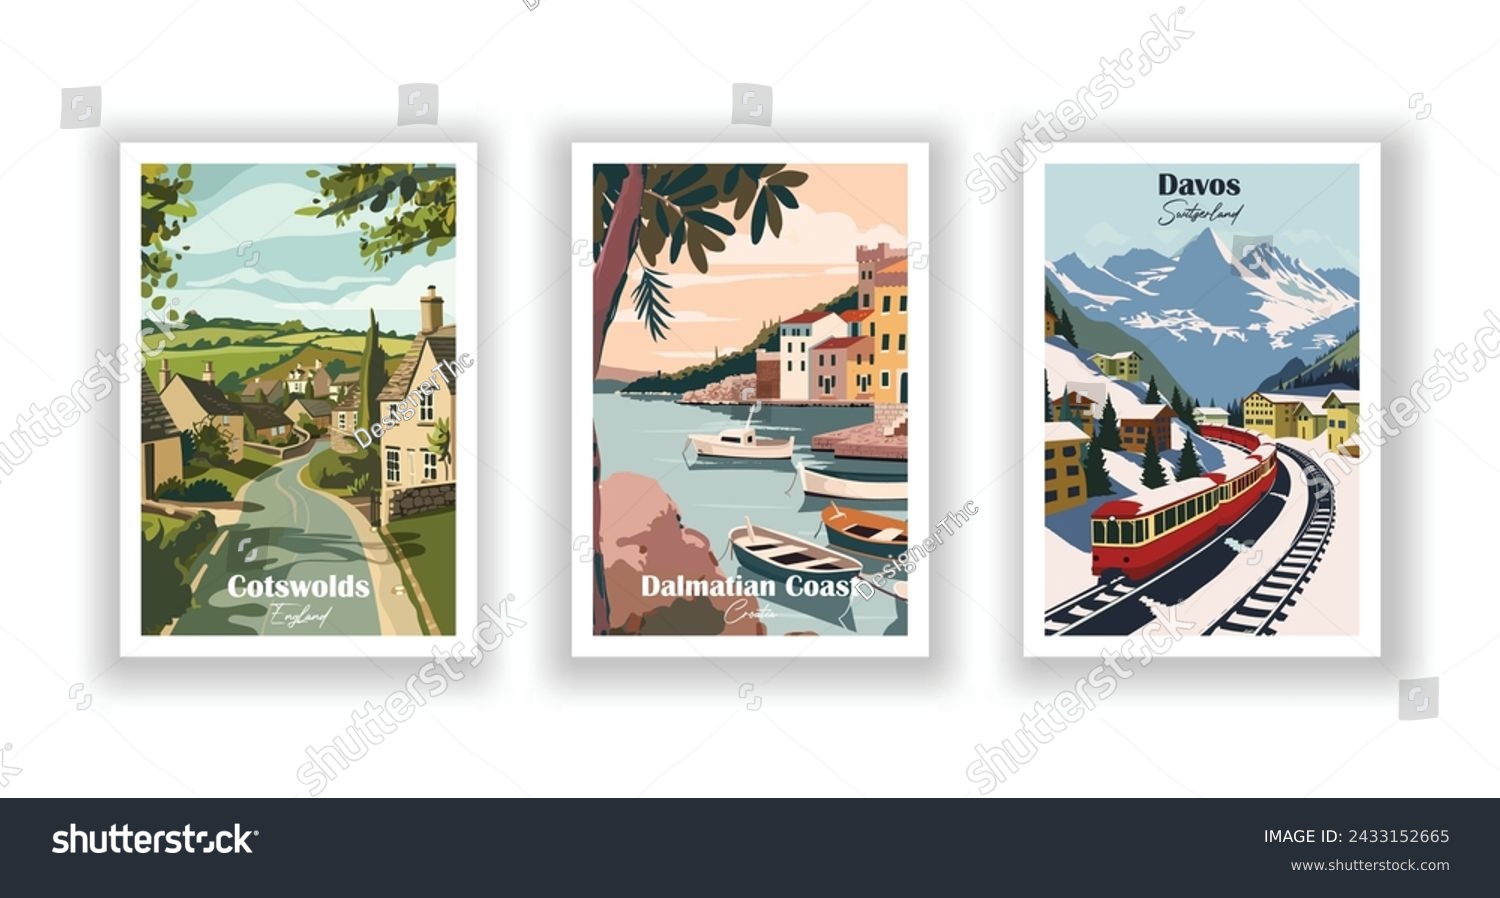 SVG of Cotswolds, England. Dalmatian Coast, Croatia. Davos, Switzerland - Set of 3 Vintage Travel Posters. Vector illustration. High Quality Prints svg